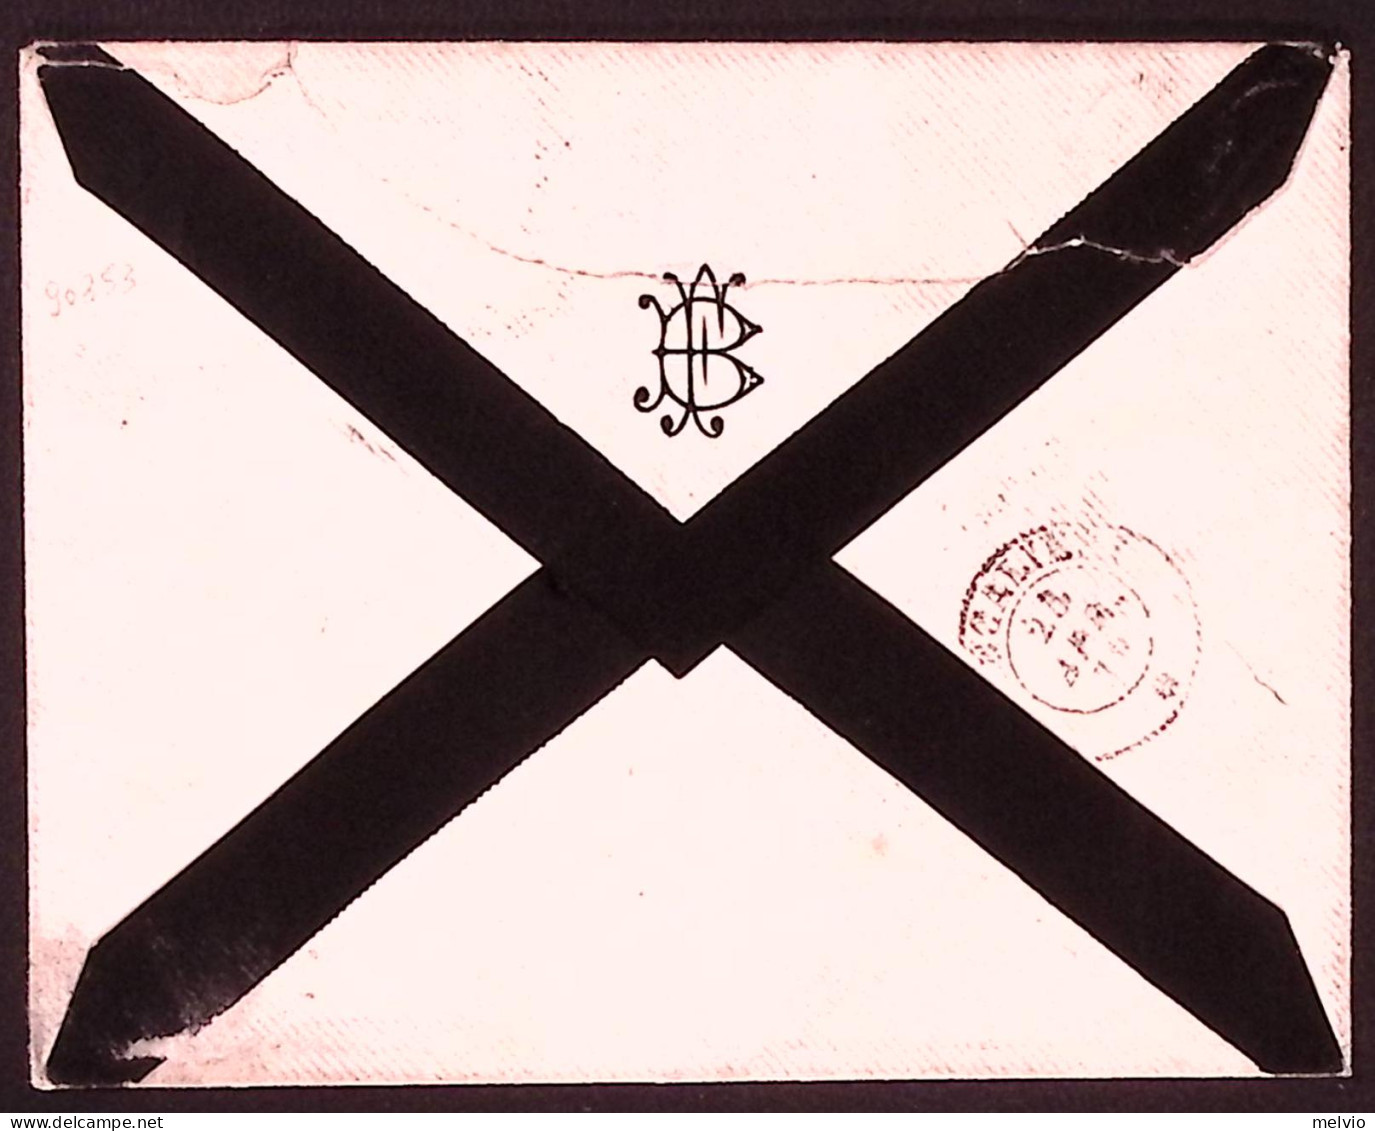 1879-Doria Cors Collettoria Su Busta Listata Lutto Genova (22.4.70) Affr. Effigi - Marcophilie